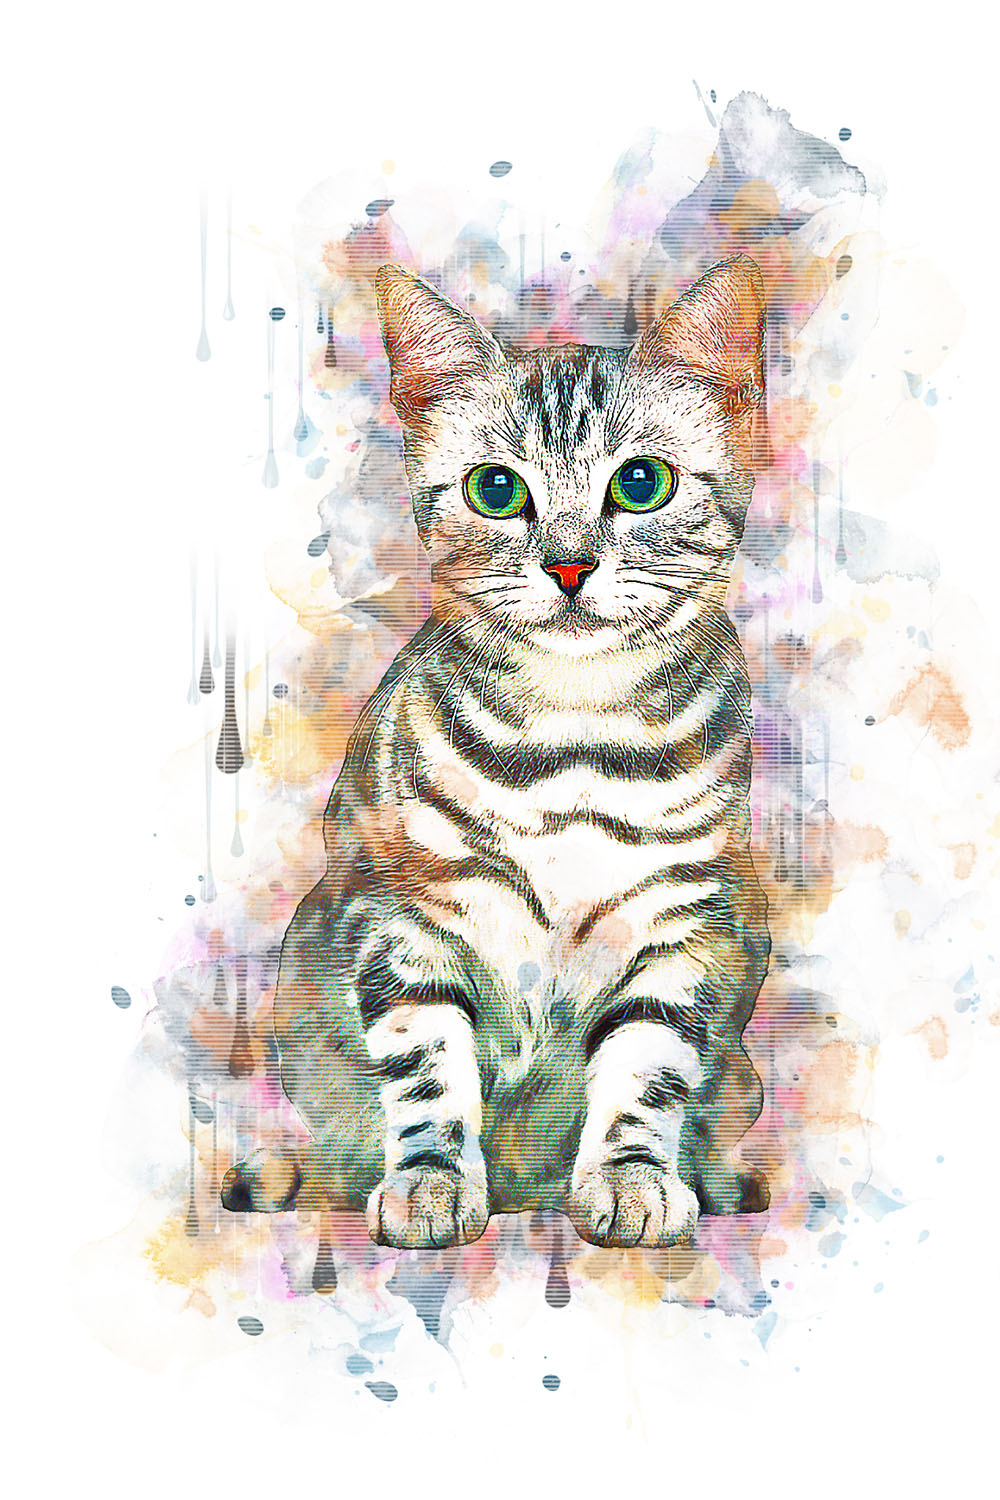 17 In 1 Moody Effect Photoshop Action Bundles Cat Portrait Example.